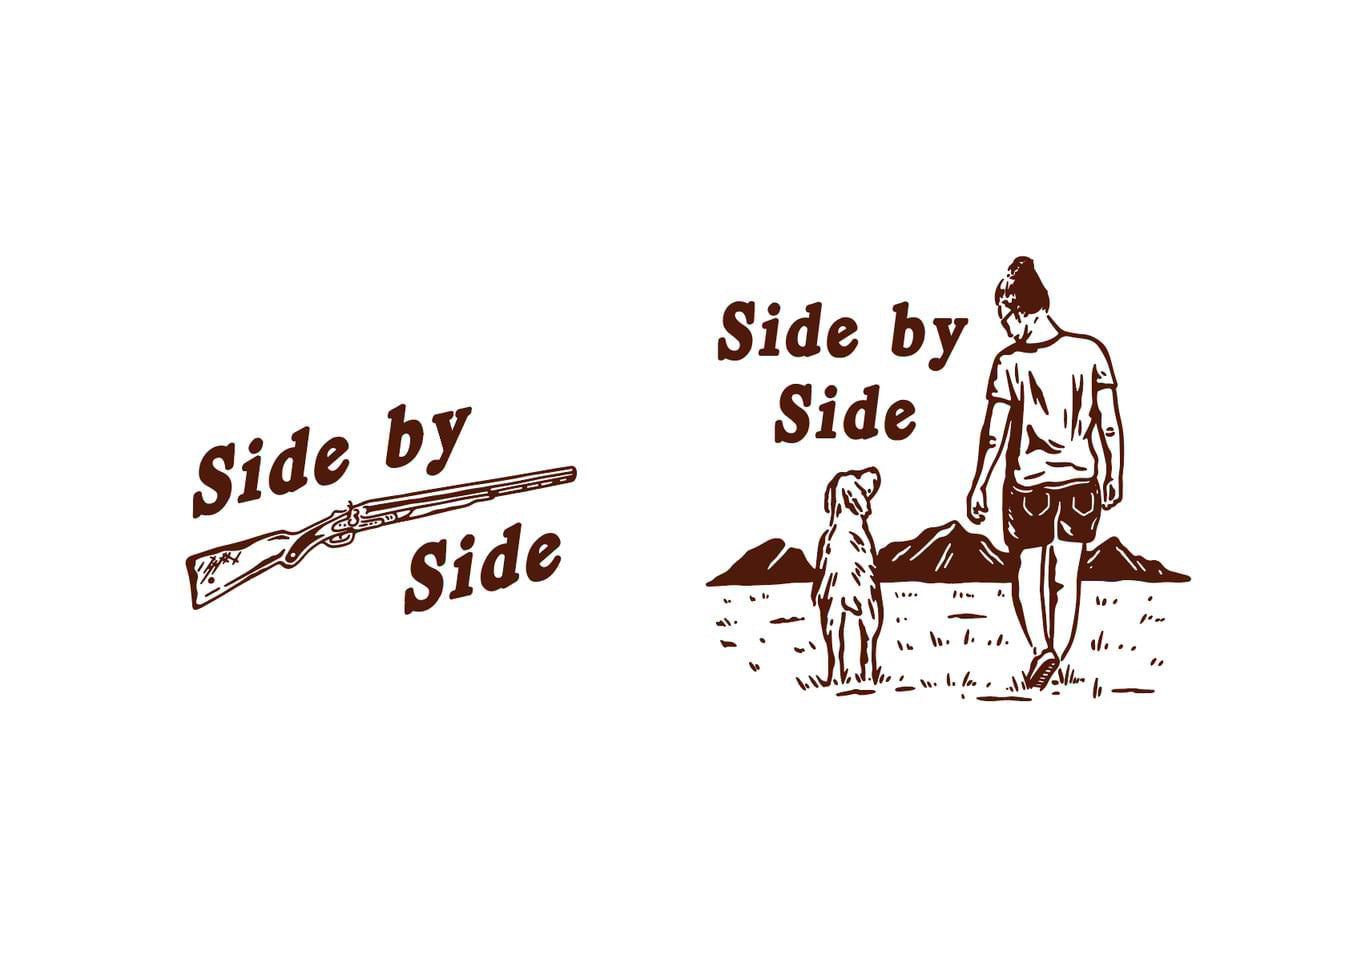 Shop Shirt | Side By Ballad Of The Bird Dog - Apparel Tees